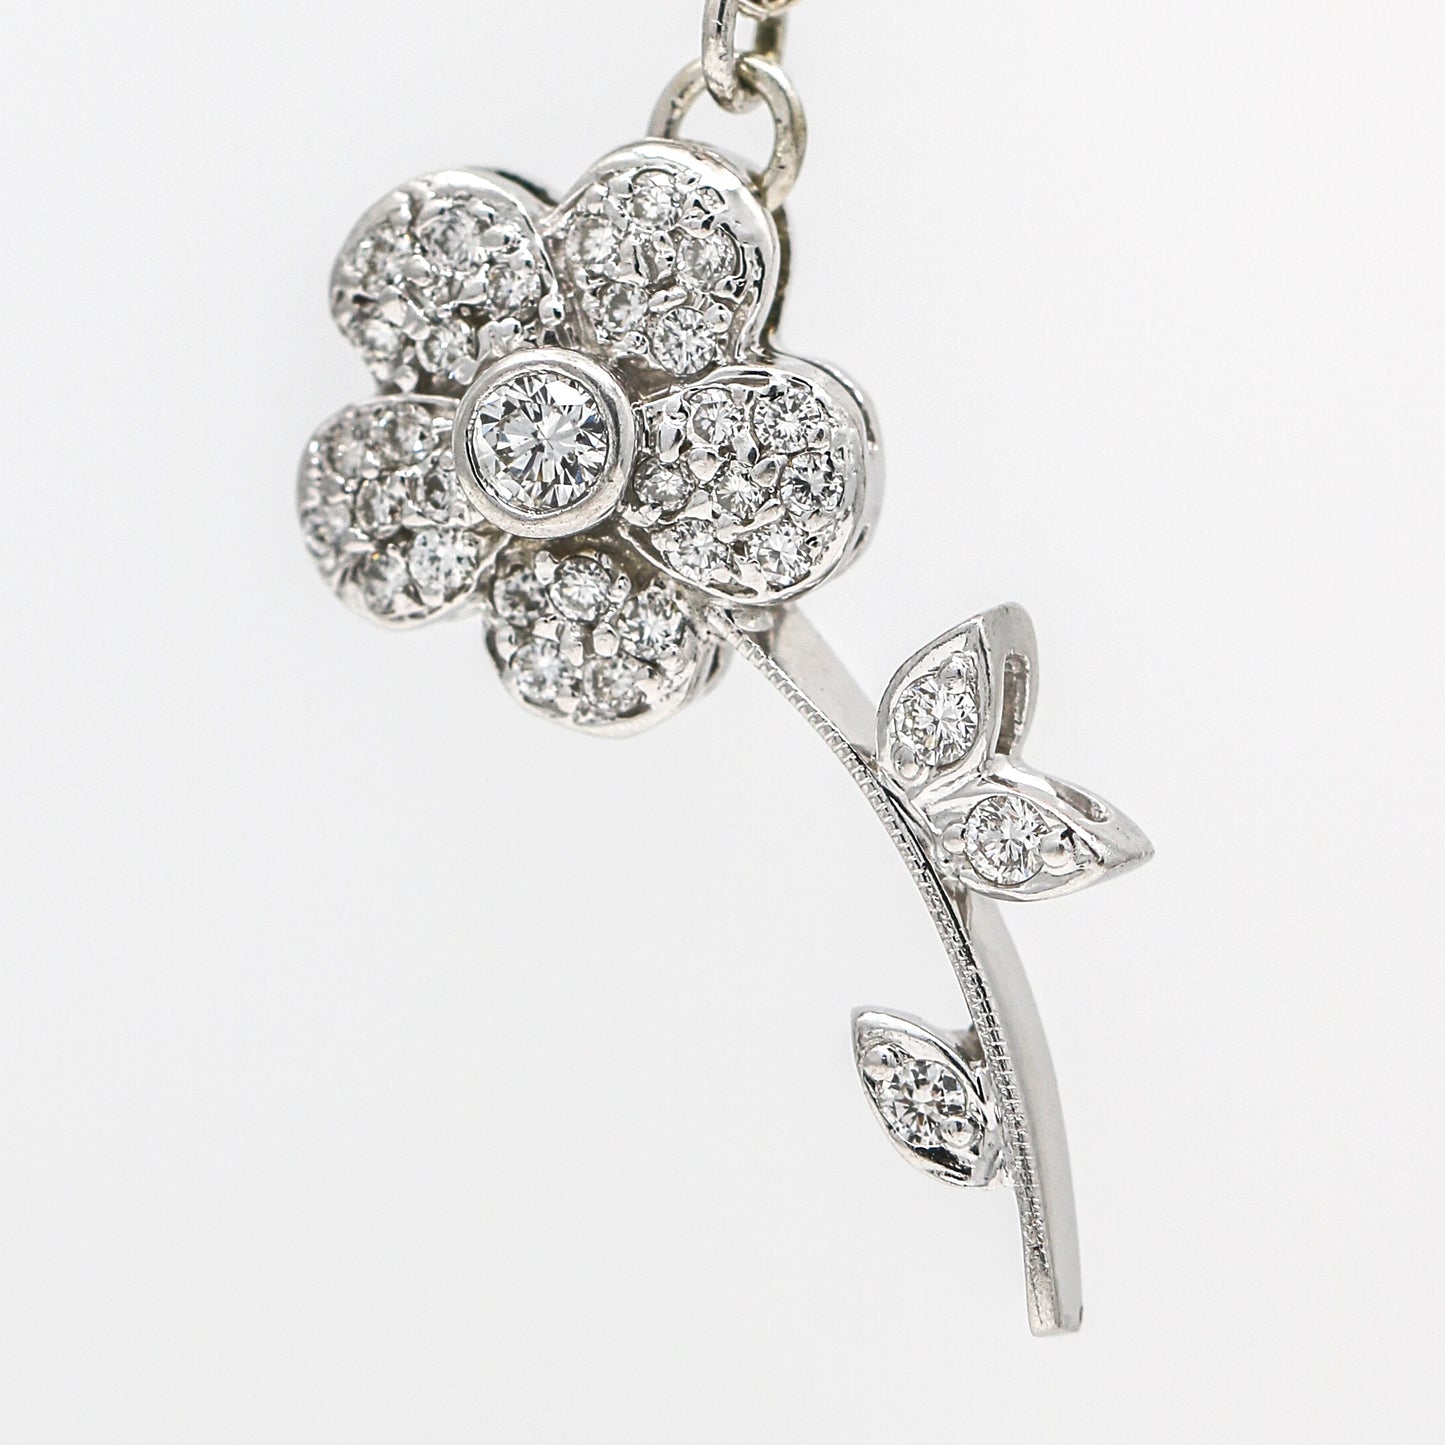 Vintage 14k White Gold Diamond Flower Necklace for Women